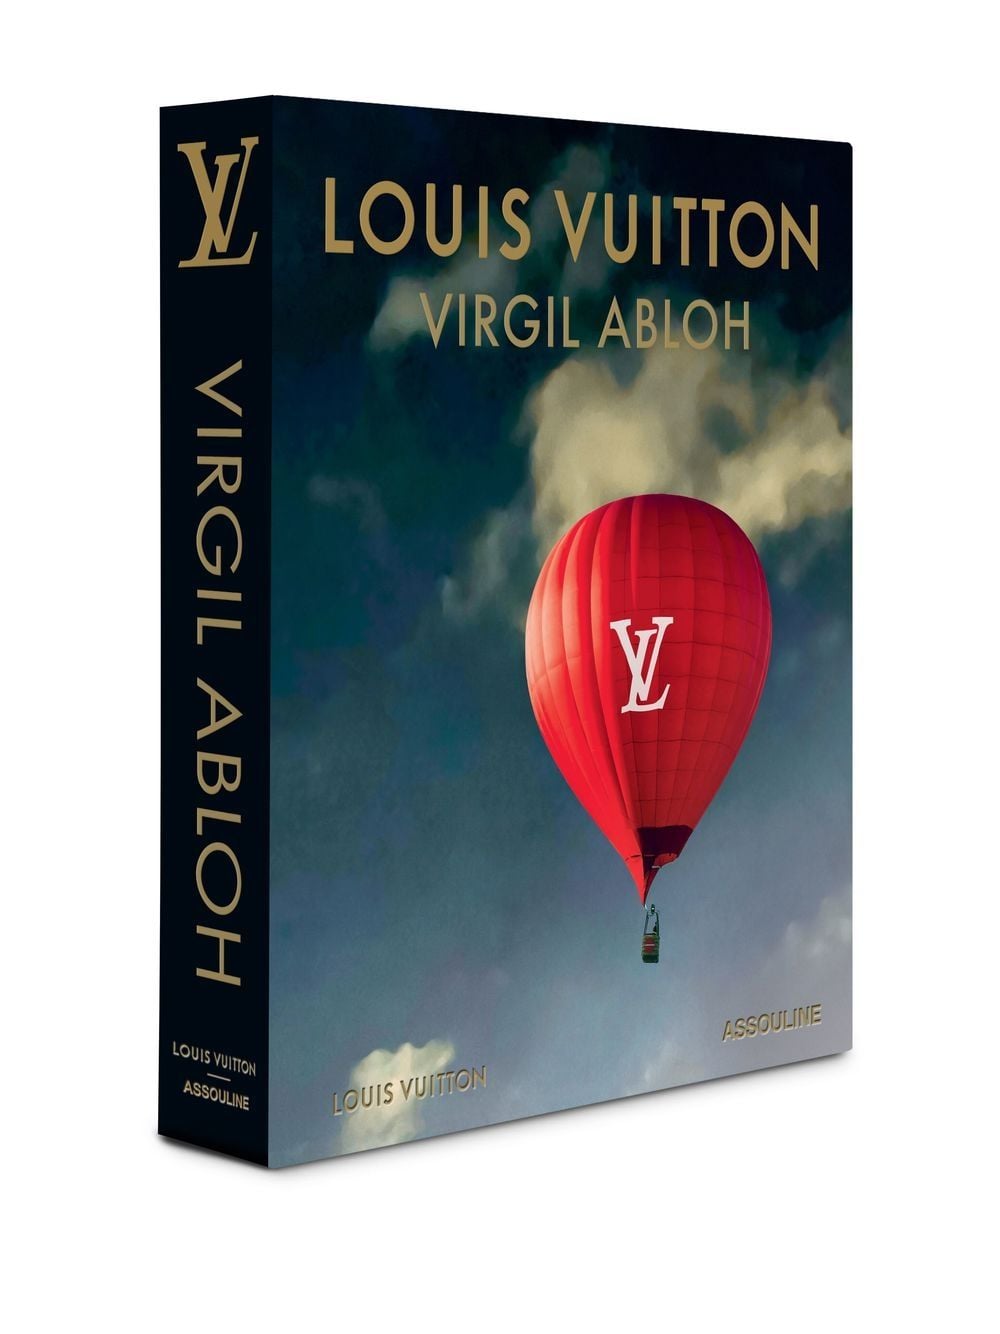 Louis Vuitton Volez Voguez Voyagez Assouline Photo Book Brand New Sealed  2016